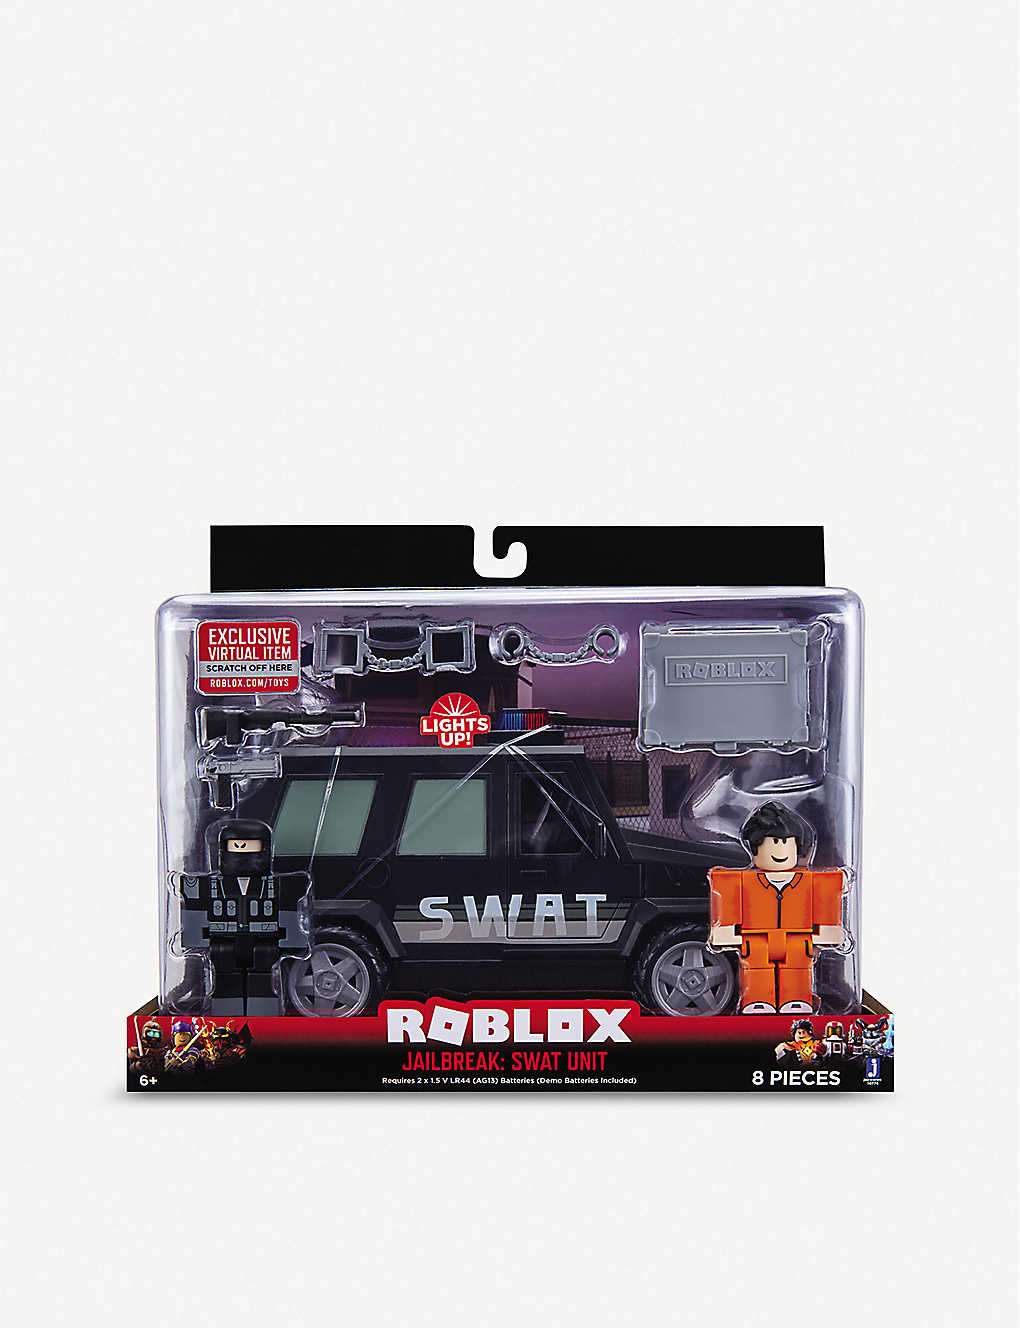 Limited Kids Toy Figure Playset Gift Series 4 ROBLOX Jailbreak SWAT Unit